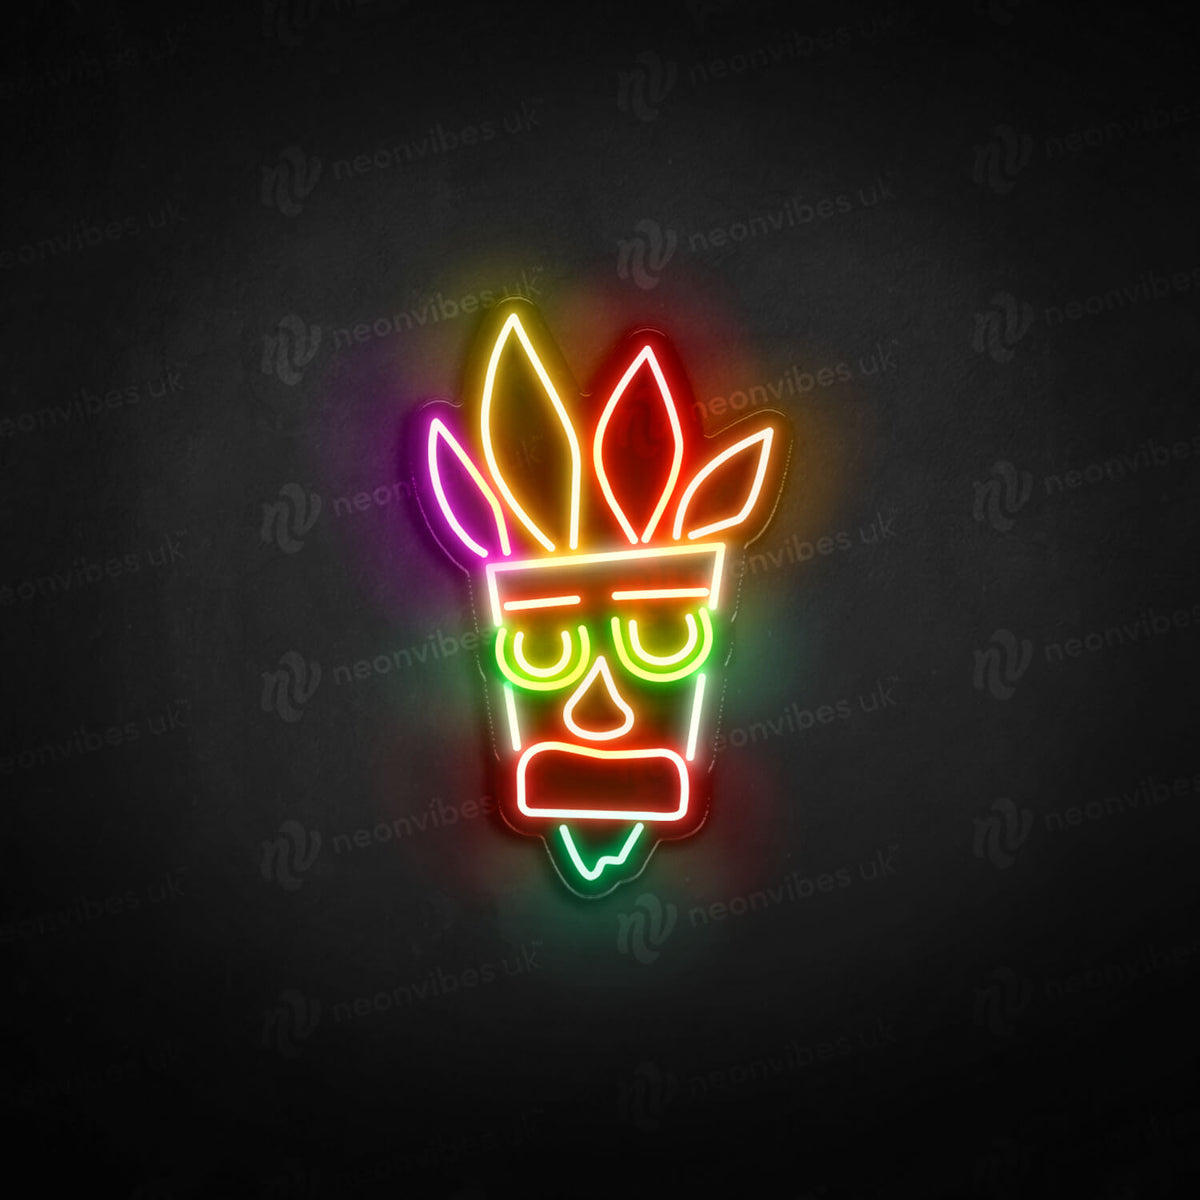 Crash Bandicoot neon sign